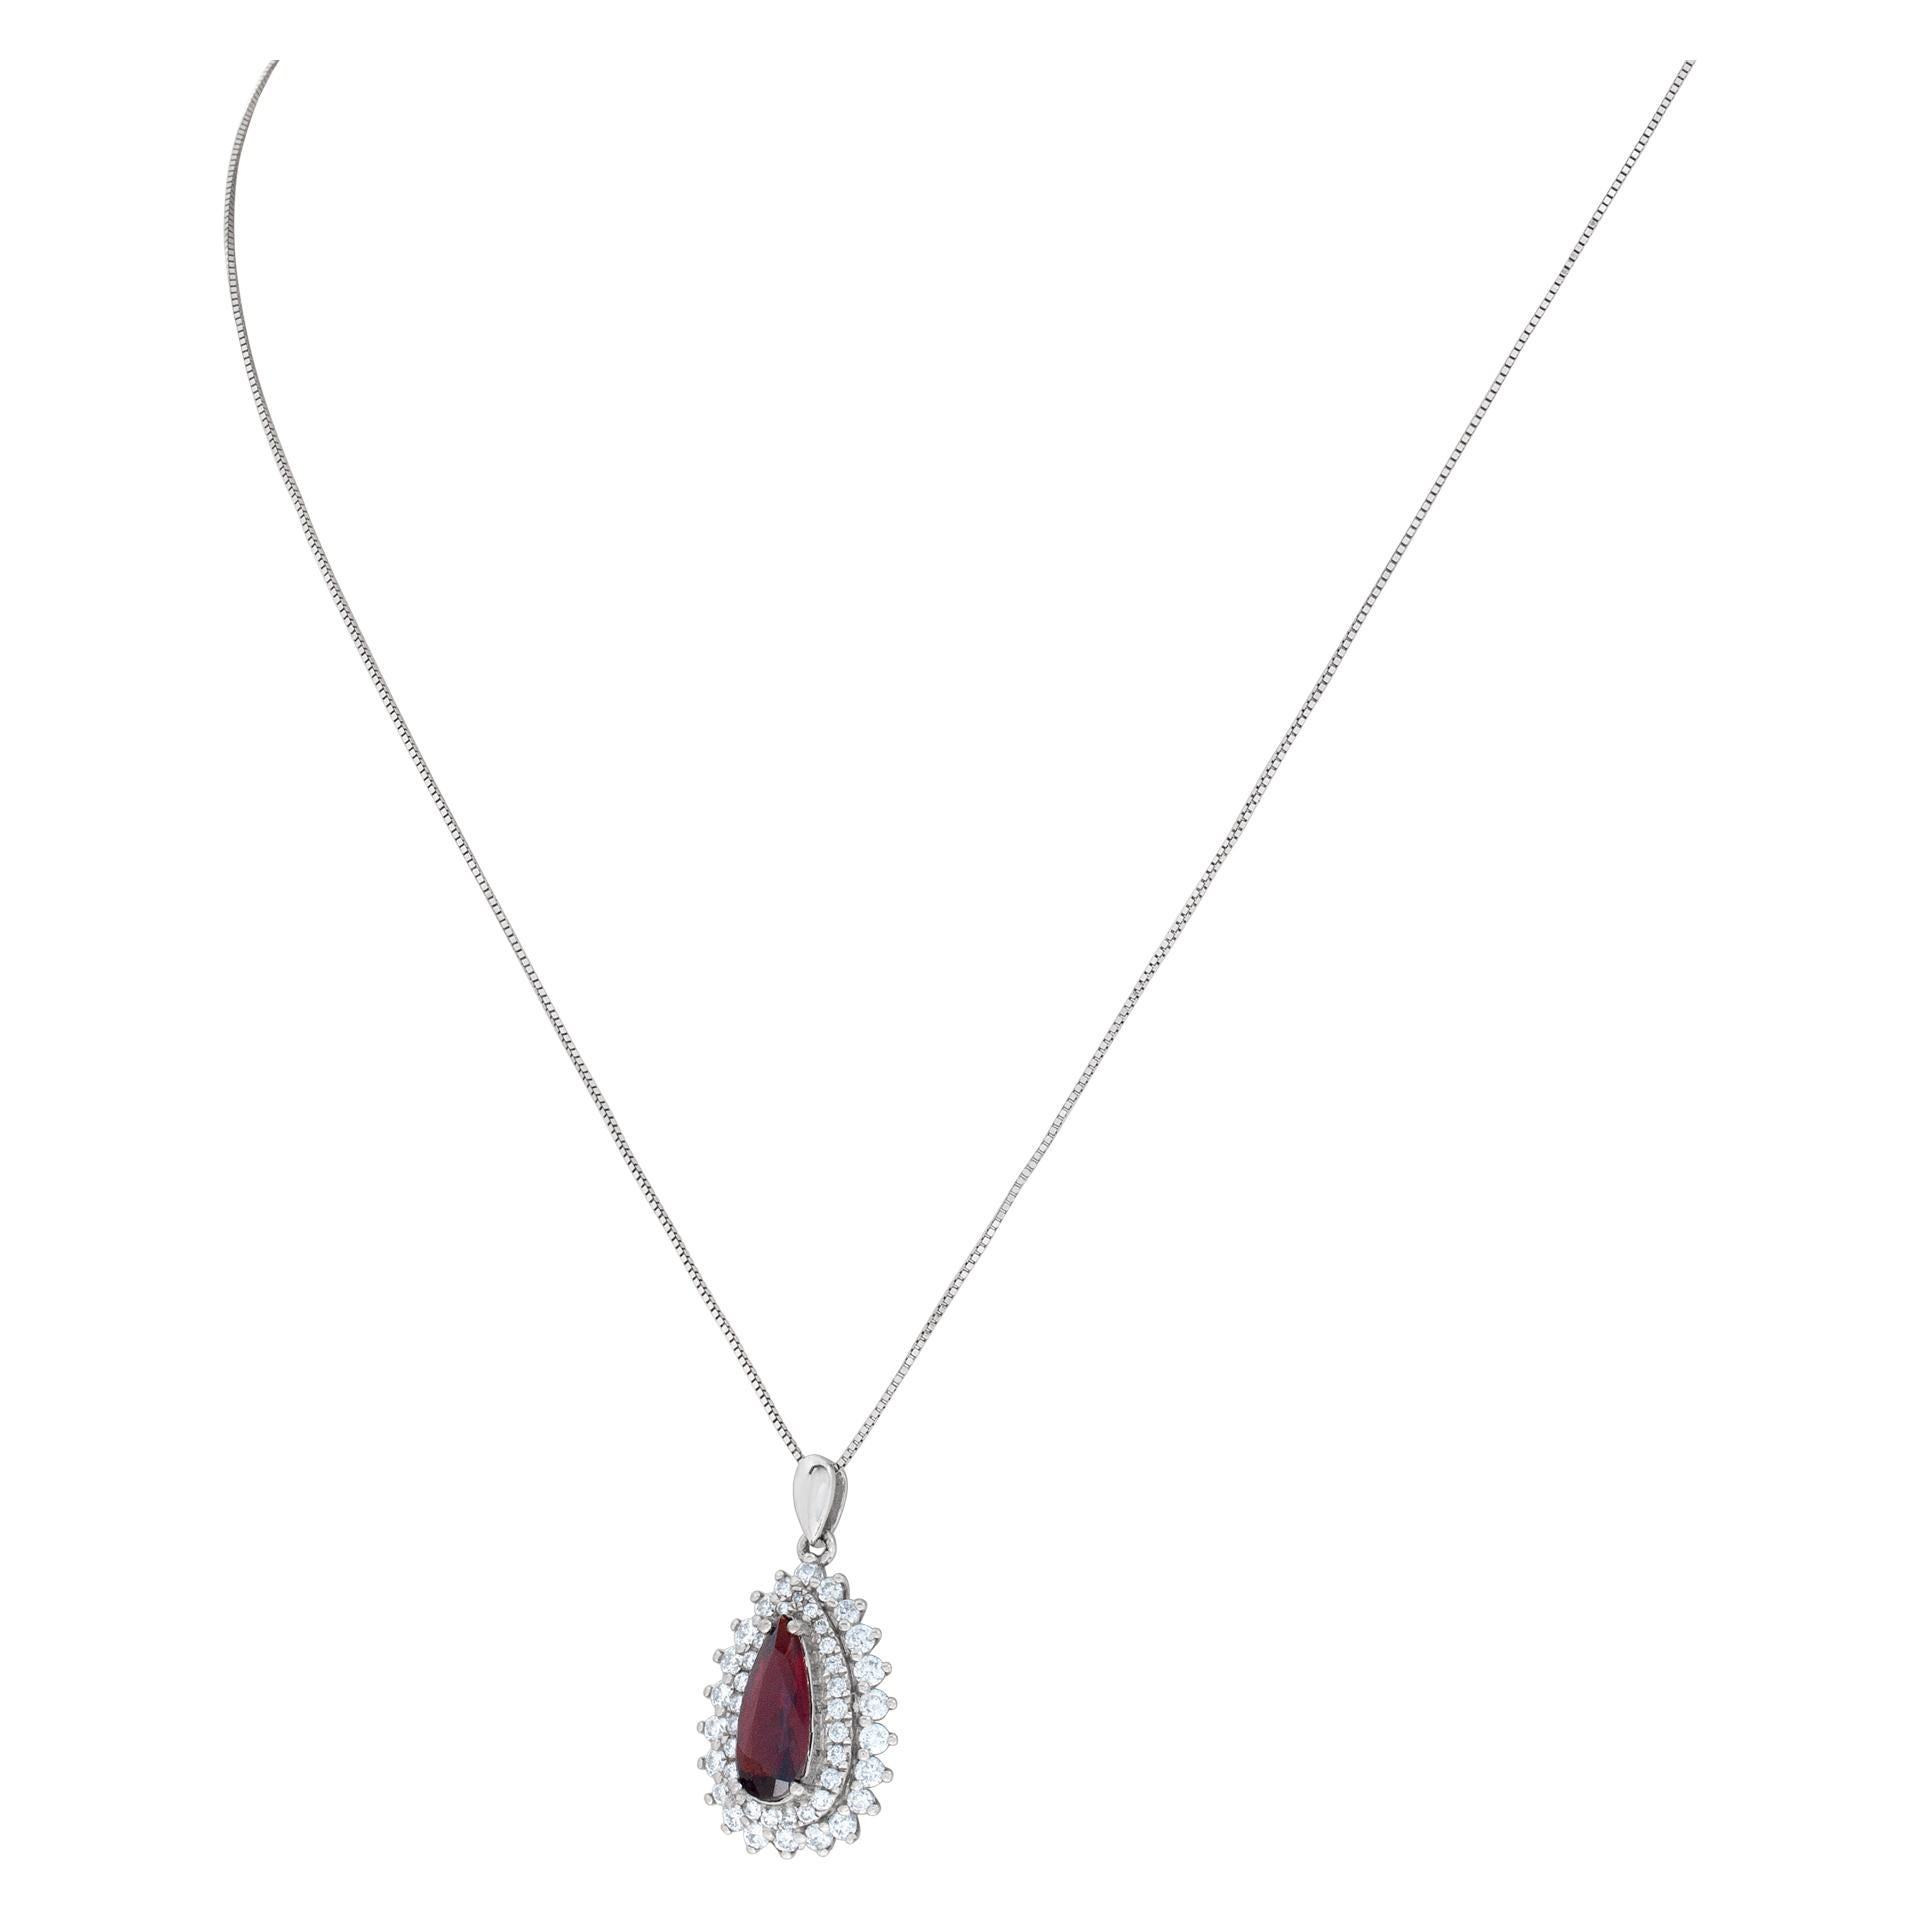 Women's Pear shape Garnet pendant surrounded by diamonds set in 18K white gold, w/ 16